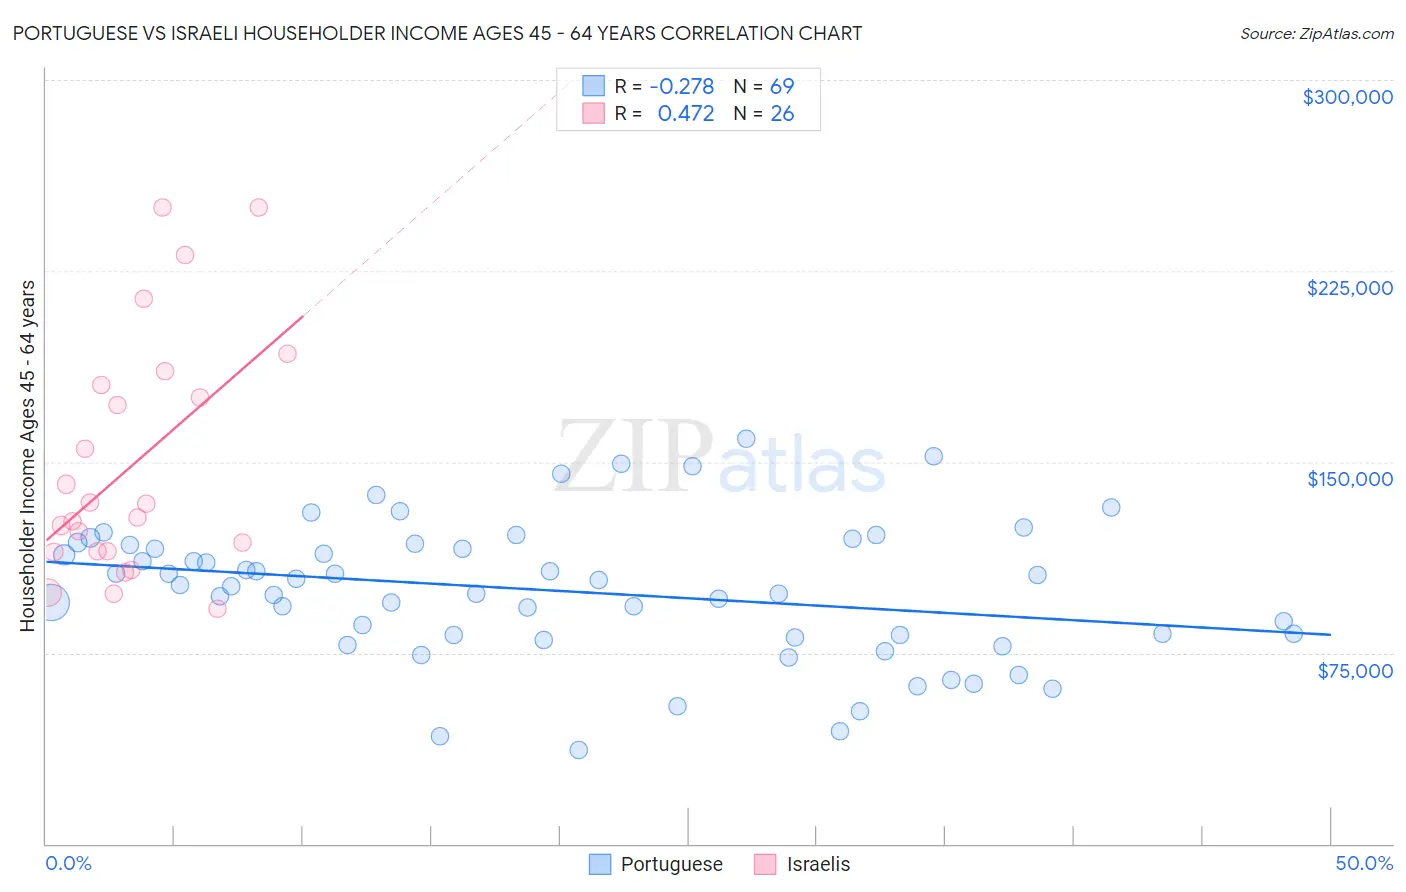 Portuguese vs Israeli Householder Income Ages 45 - 64 years